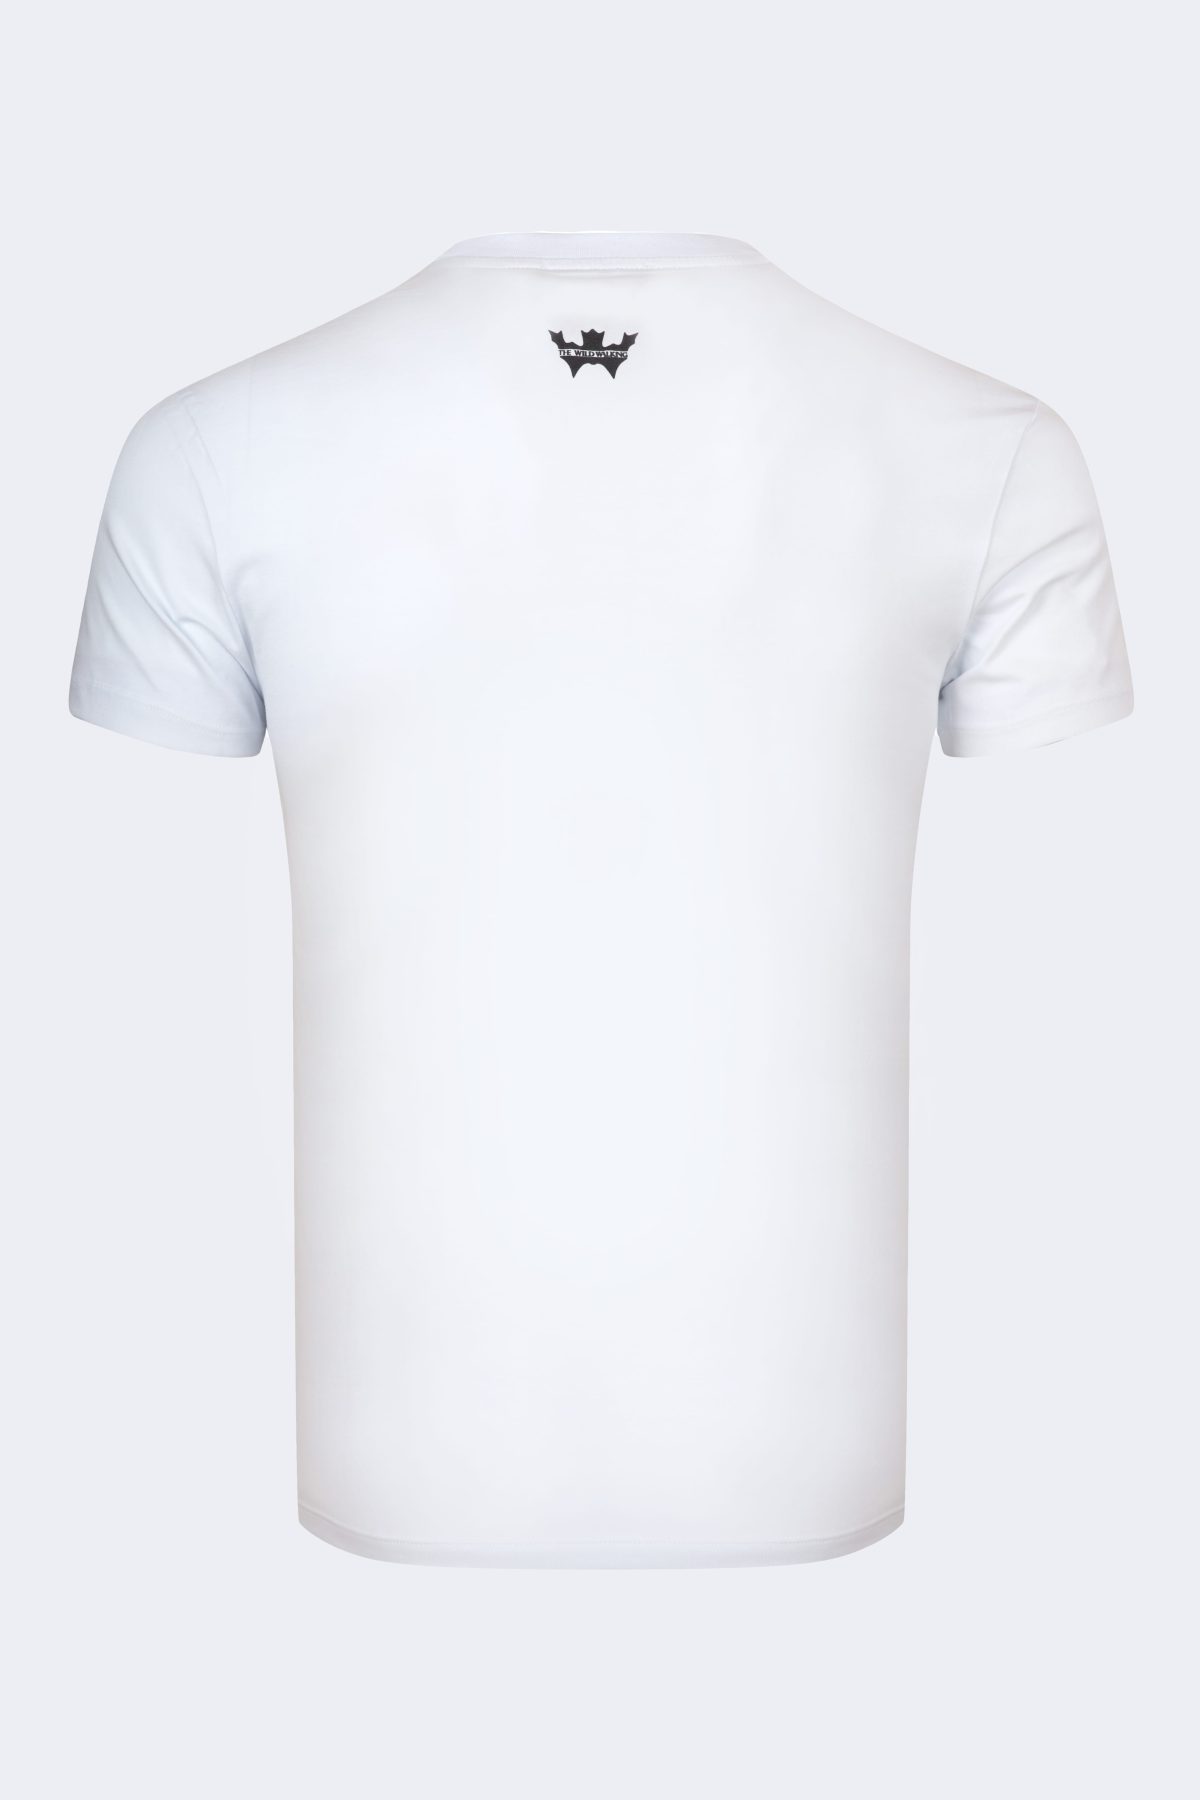 Lily pattern printed t-shirt – White-Black-2838